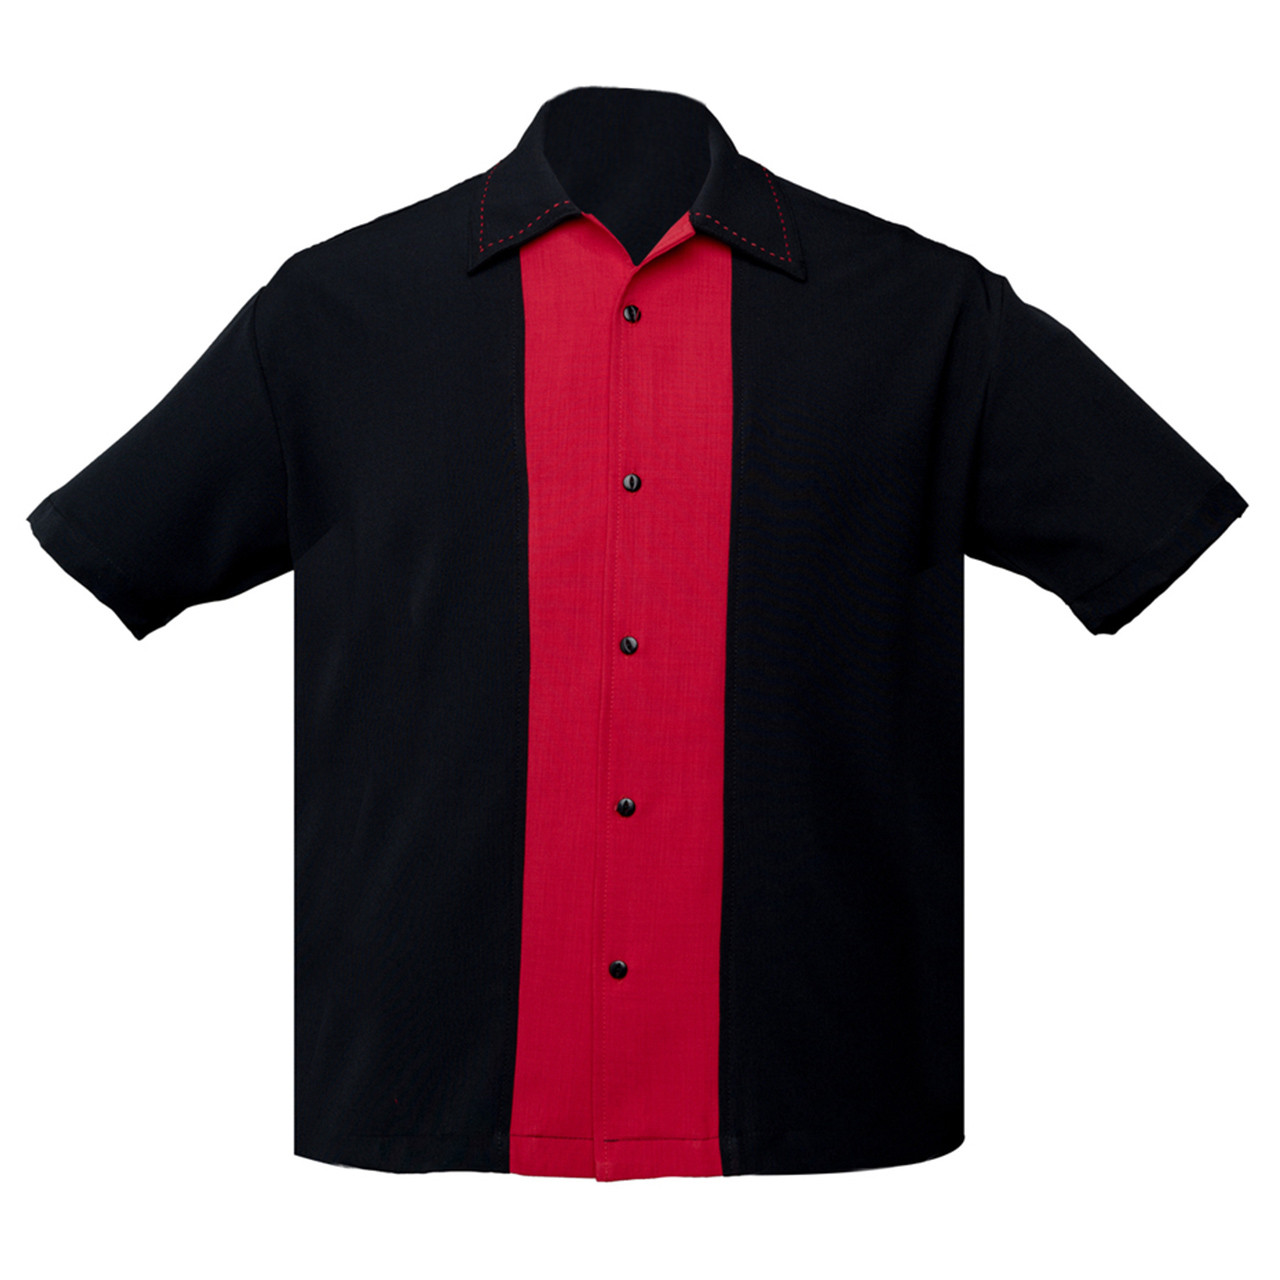 Steady Clothing Big Daddy Bowling Shirt Black Red - Merch2rock ...